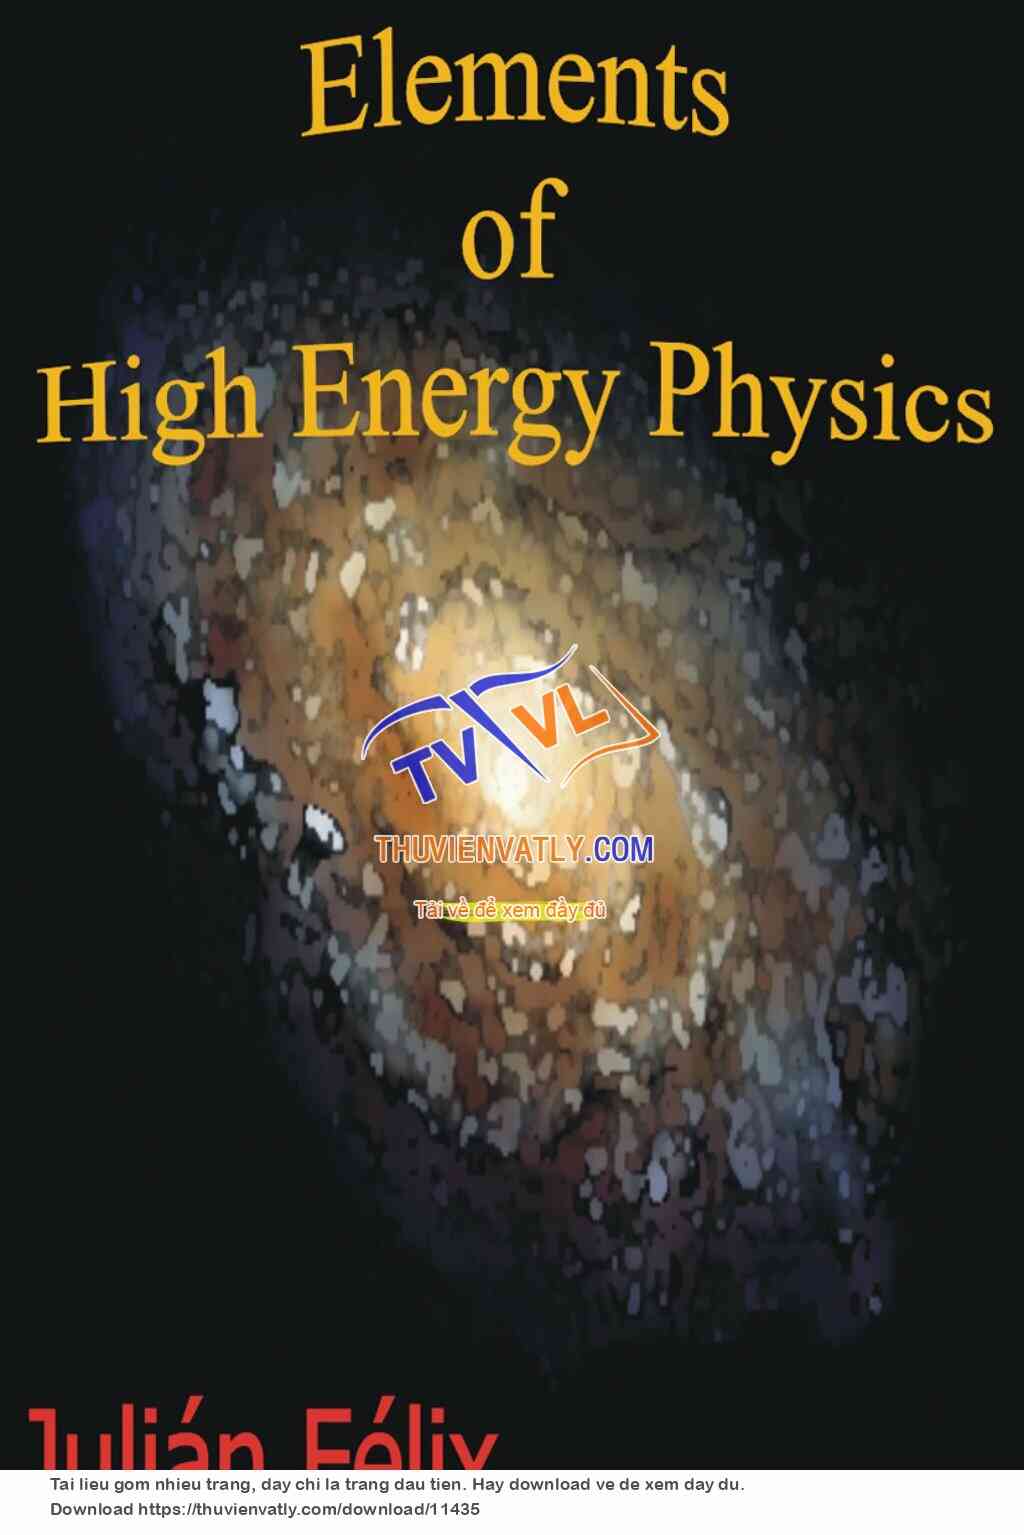 Elements of High Energy Physics